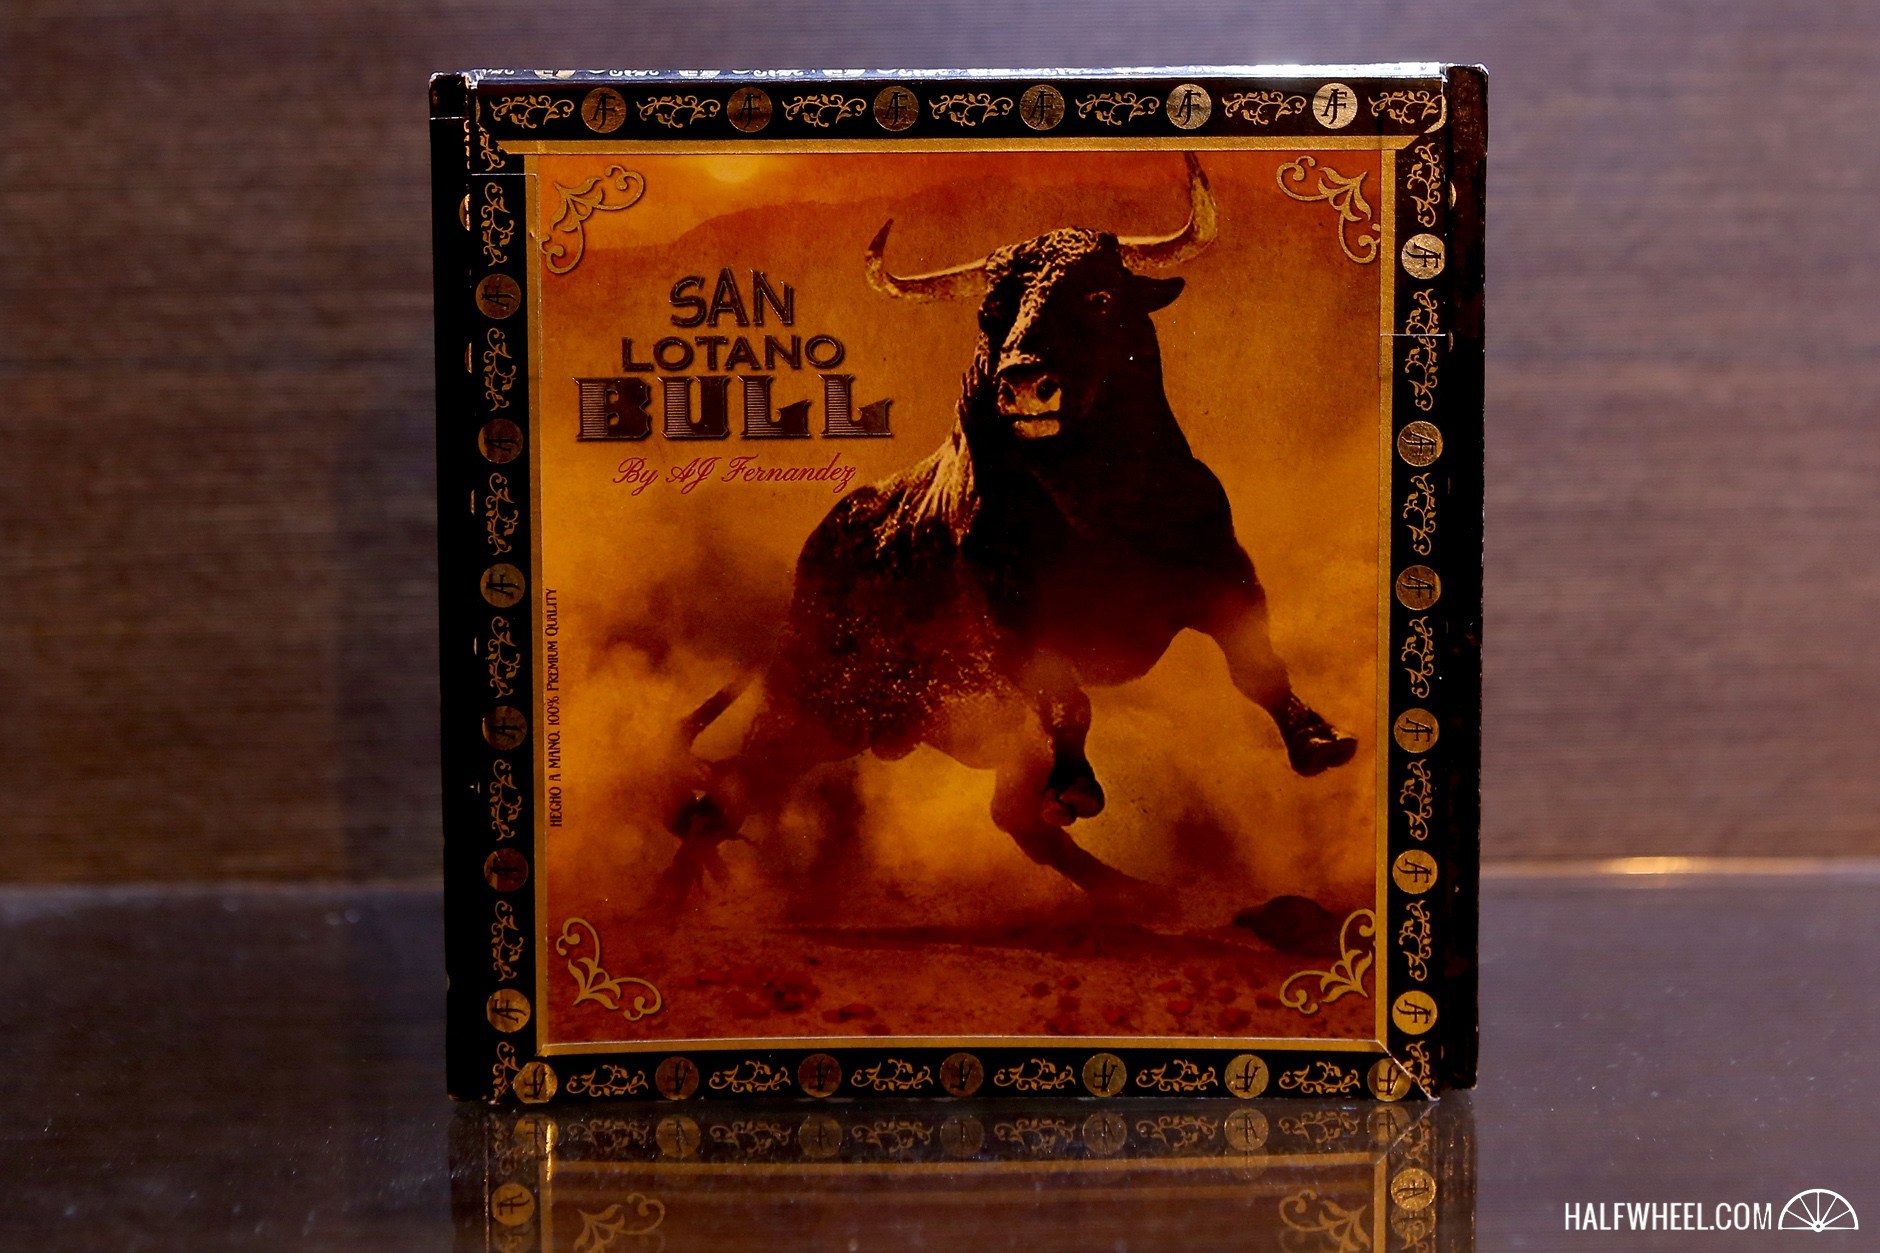 San Lotano The Bull